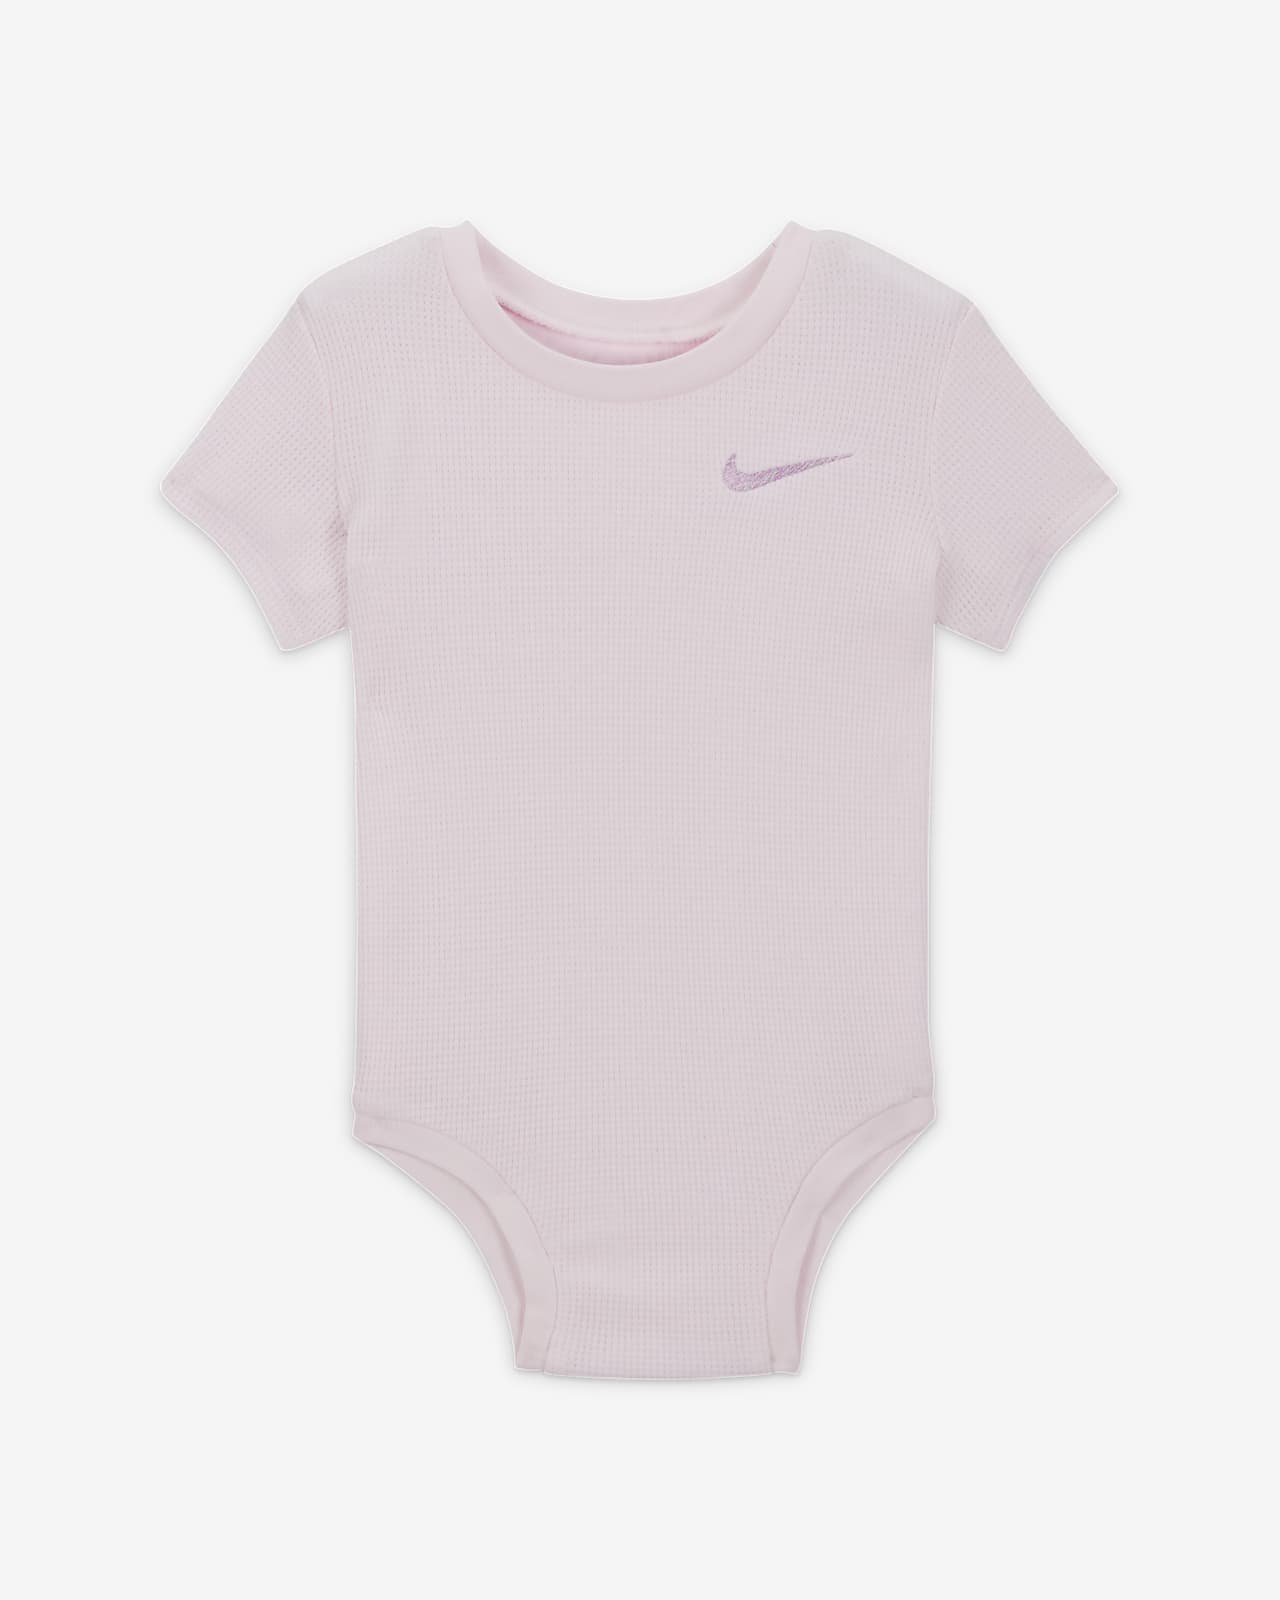 Body para bebé Nike ReadySet